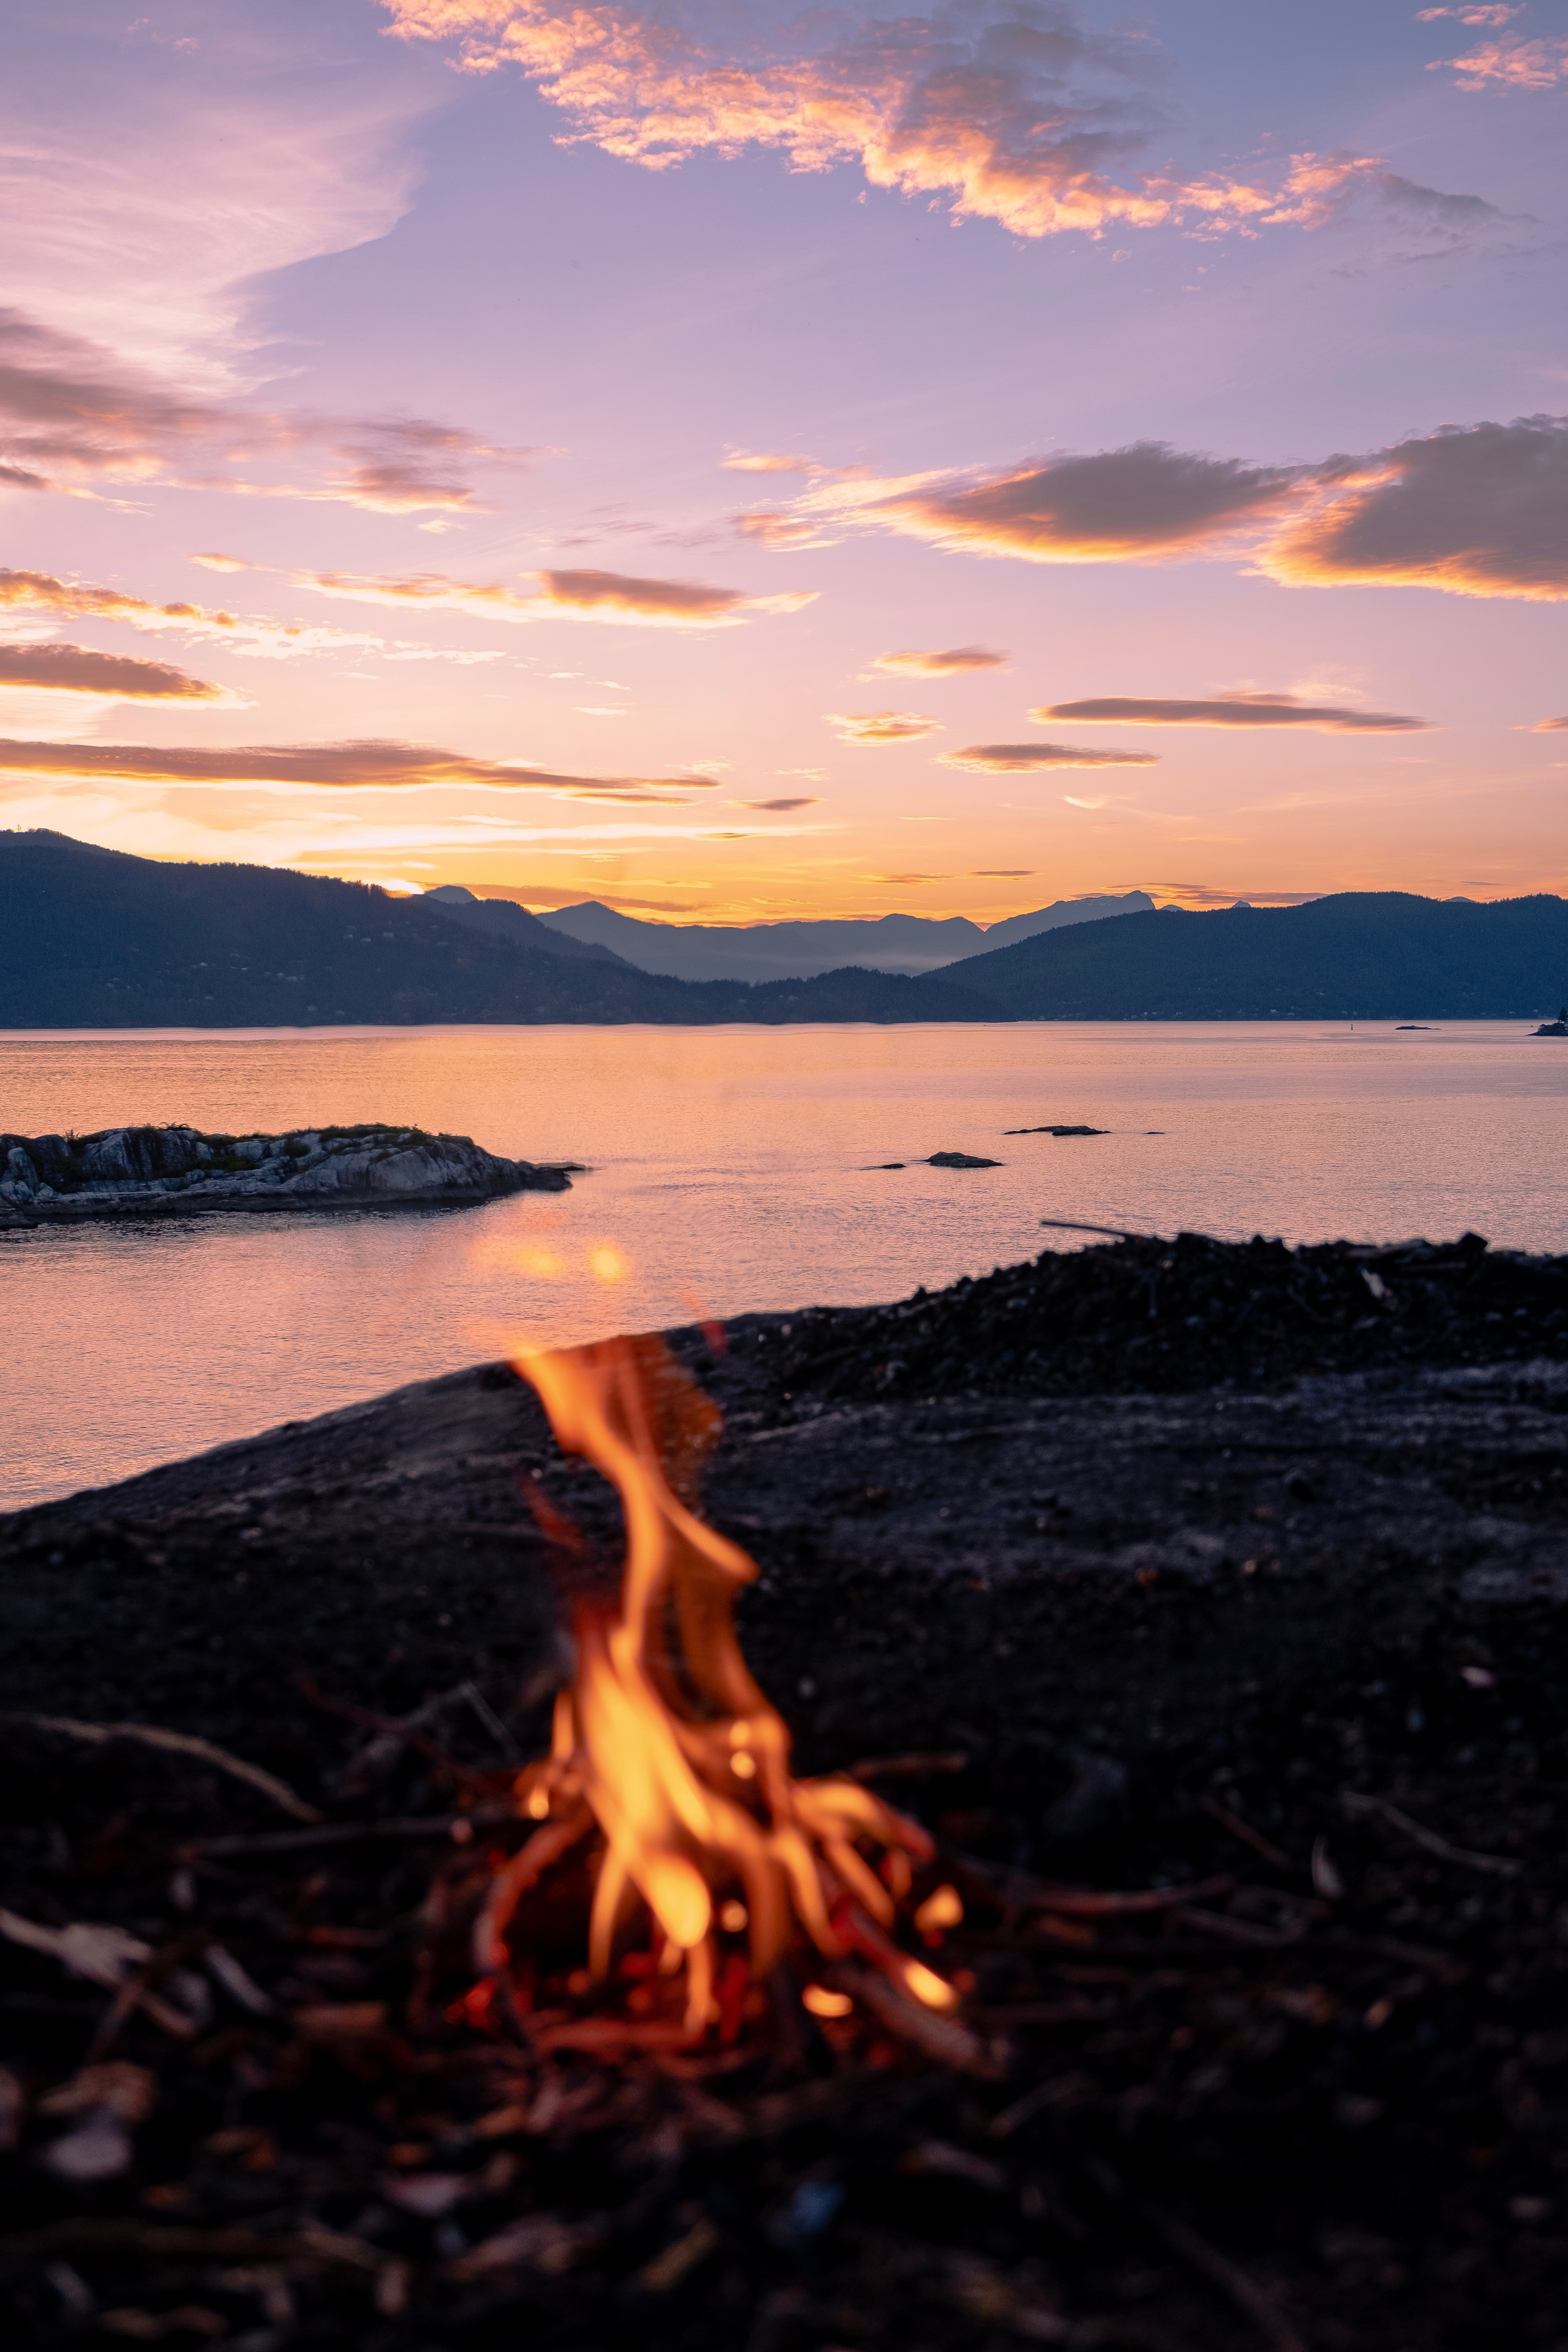 fire, miscellaneous, mountains, bonfire, campsite, camping, sunset, sea, miscellanea